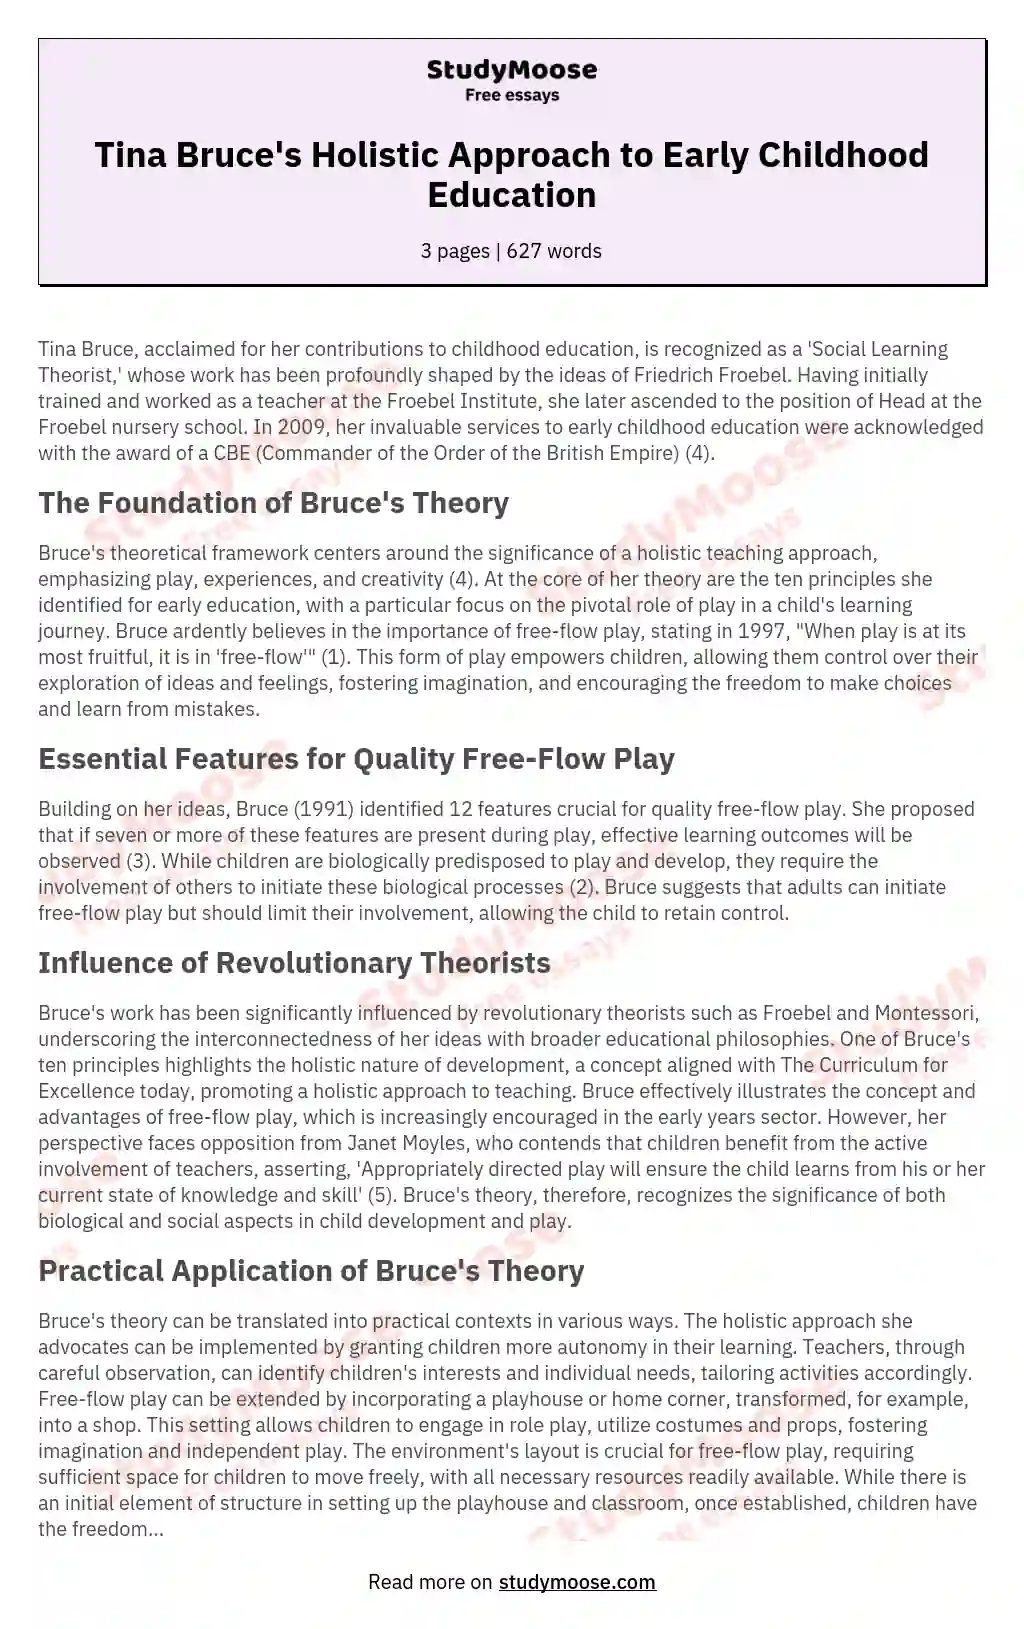 tina bruce theory of play